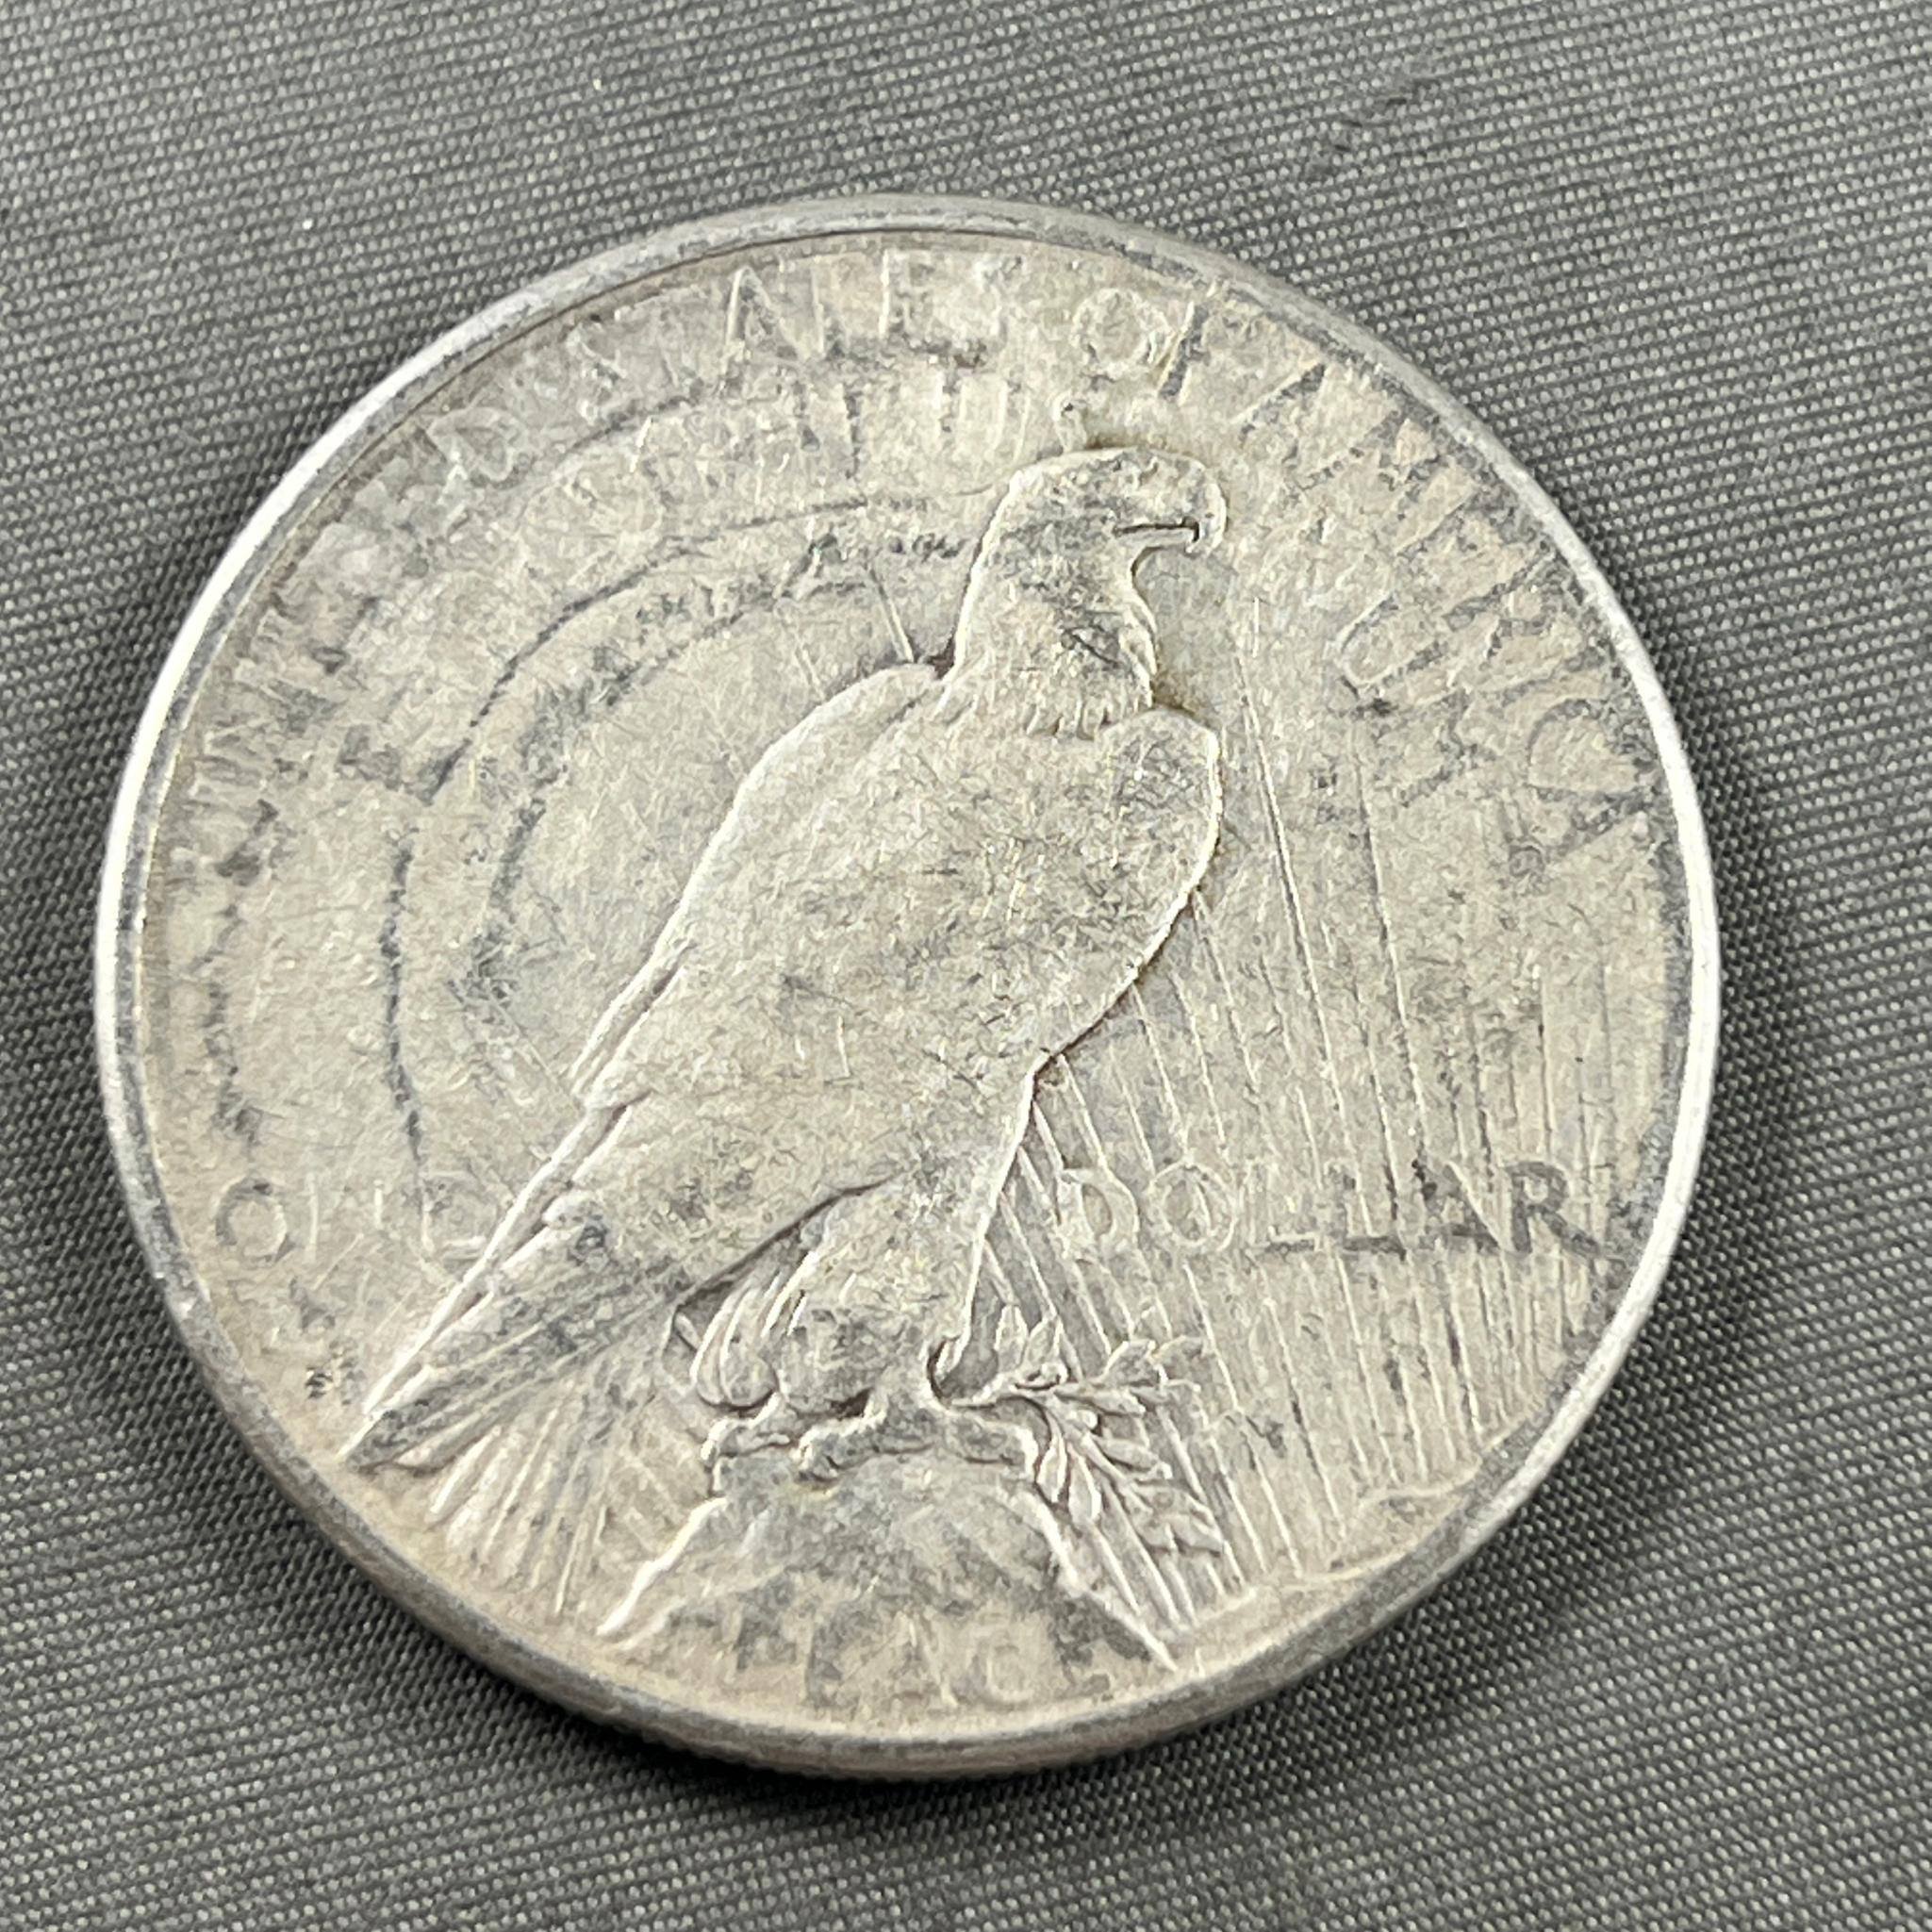 1922-S Peace Silver Dollar, 90% silver